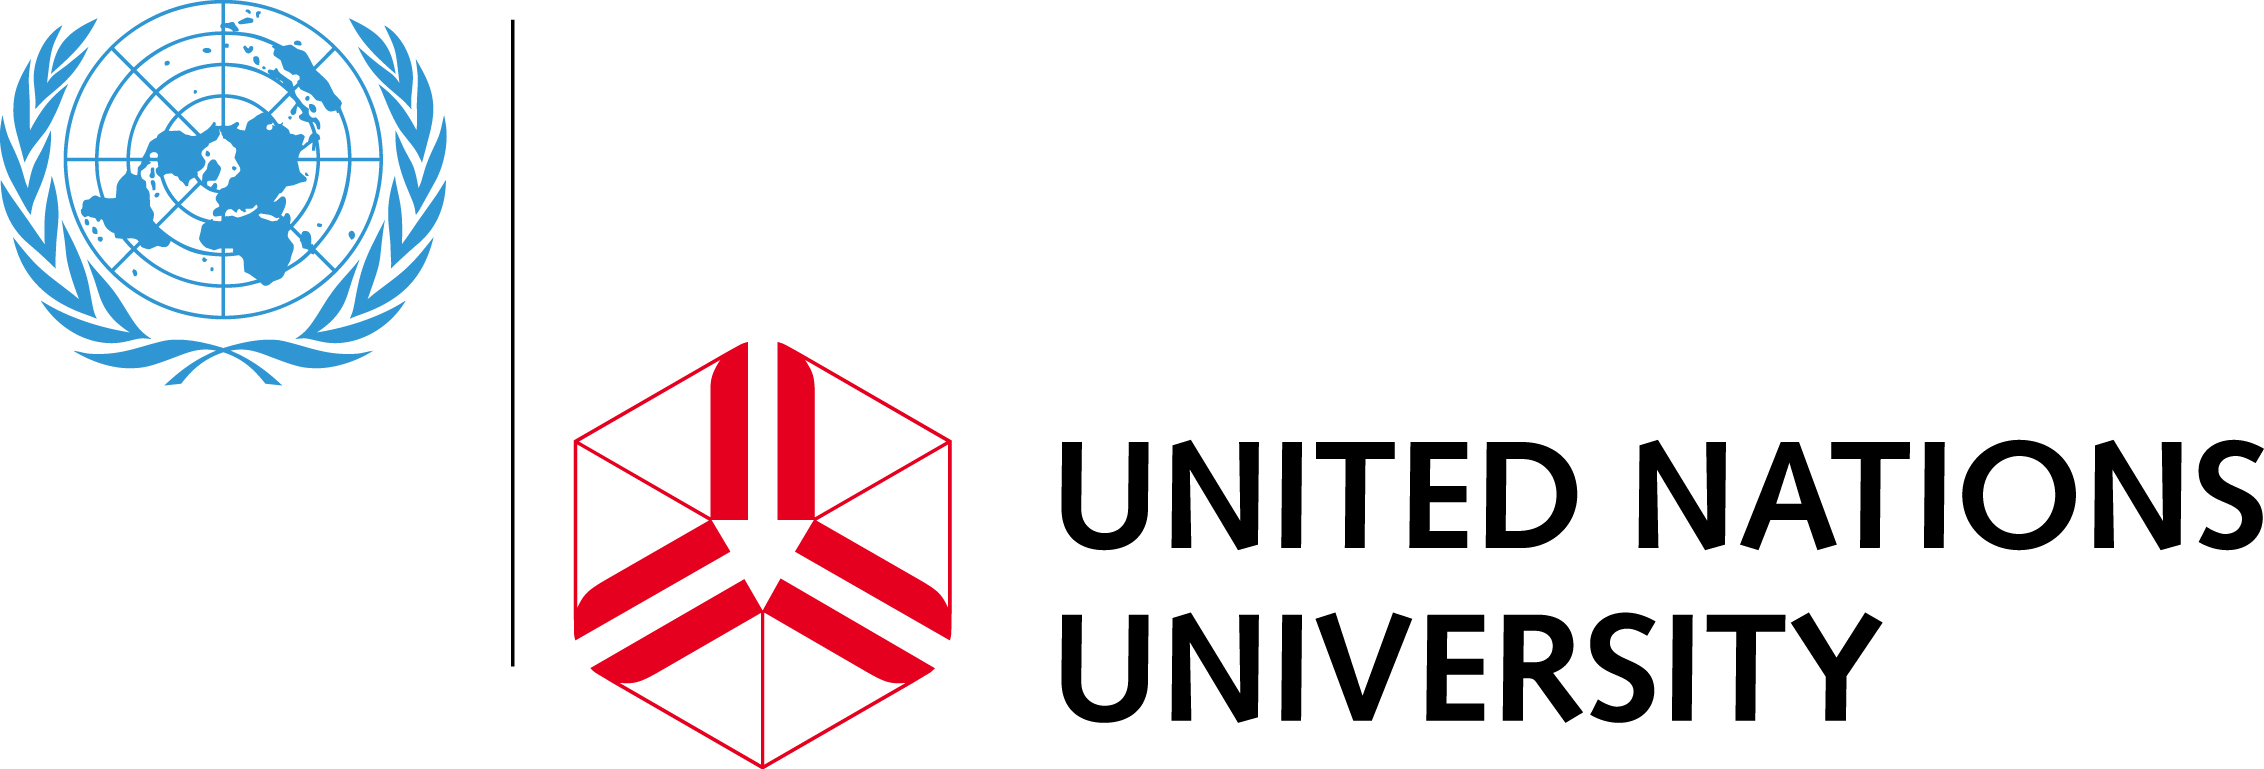 2014 UNU-INRA PhD Internship Programme for Africans